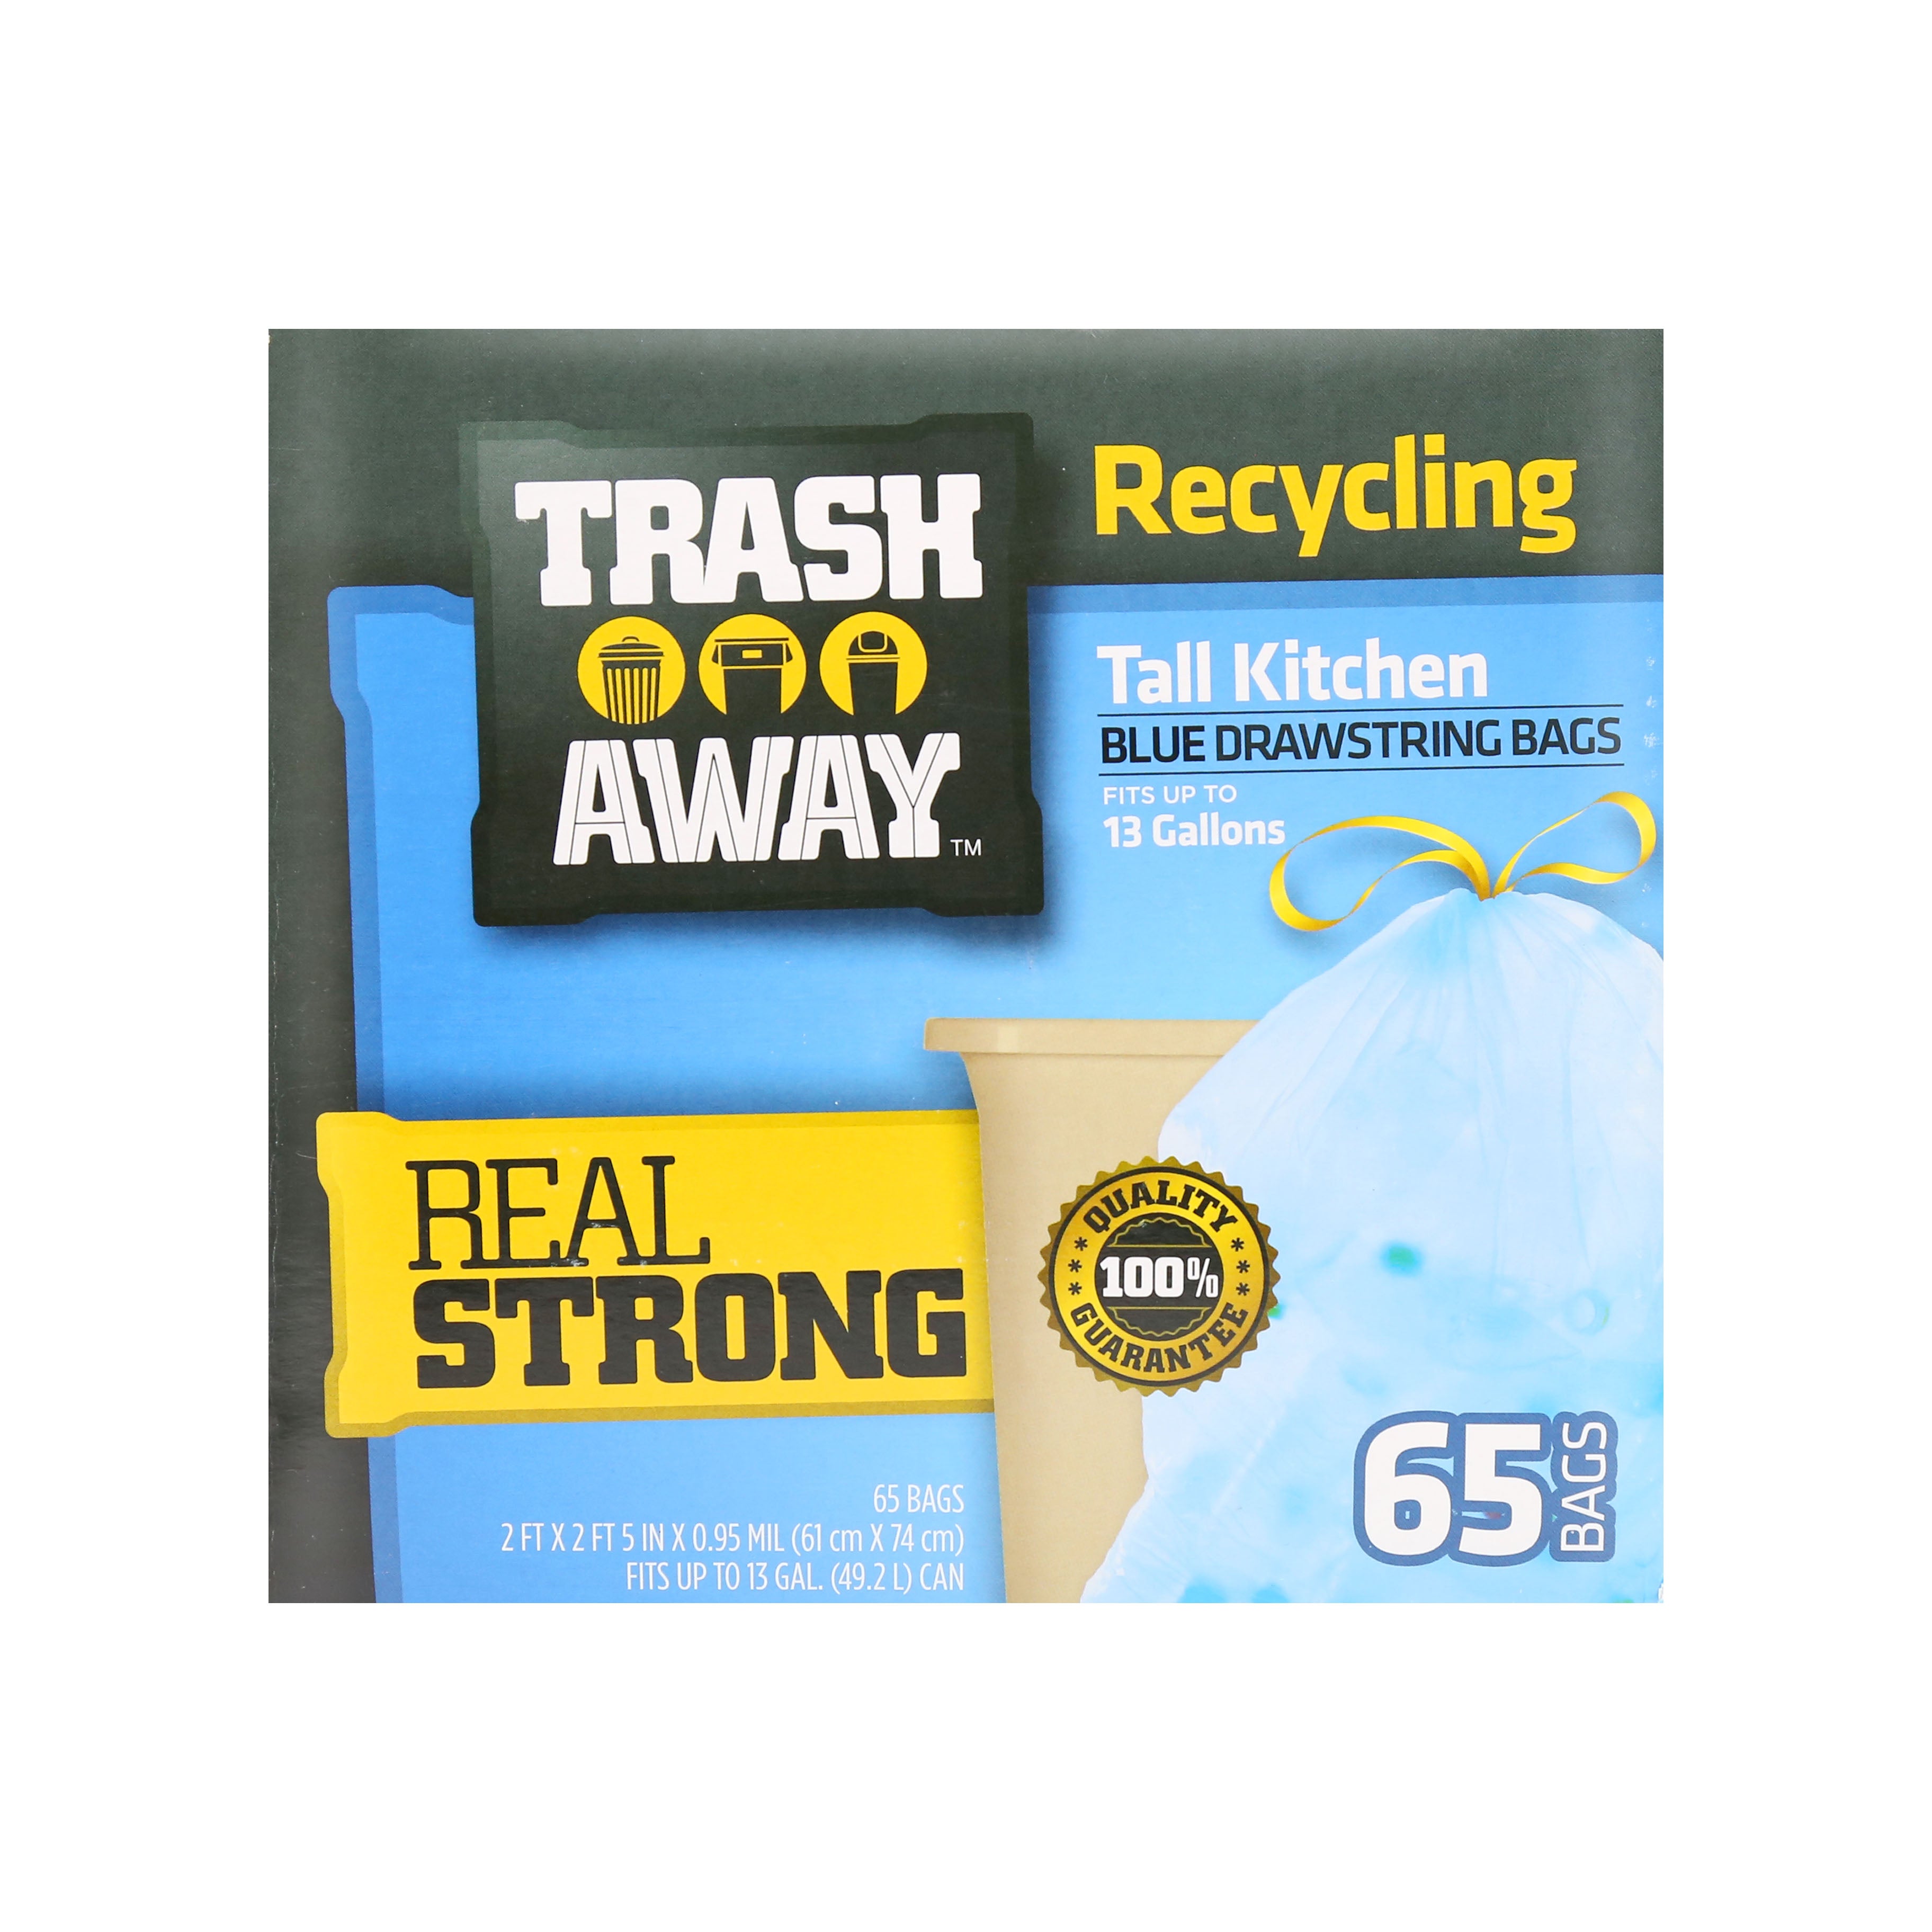 Recycling Large Trash Drawstring Blue Bags